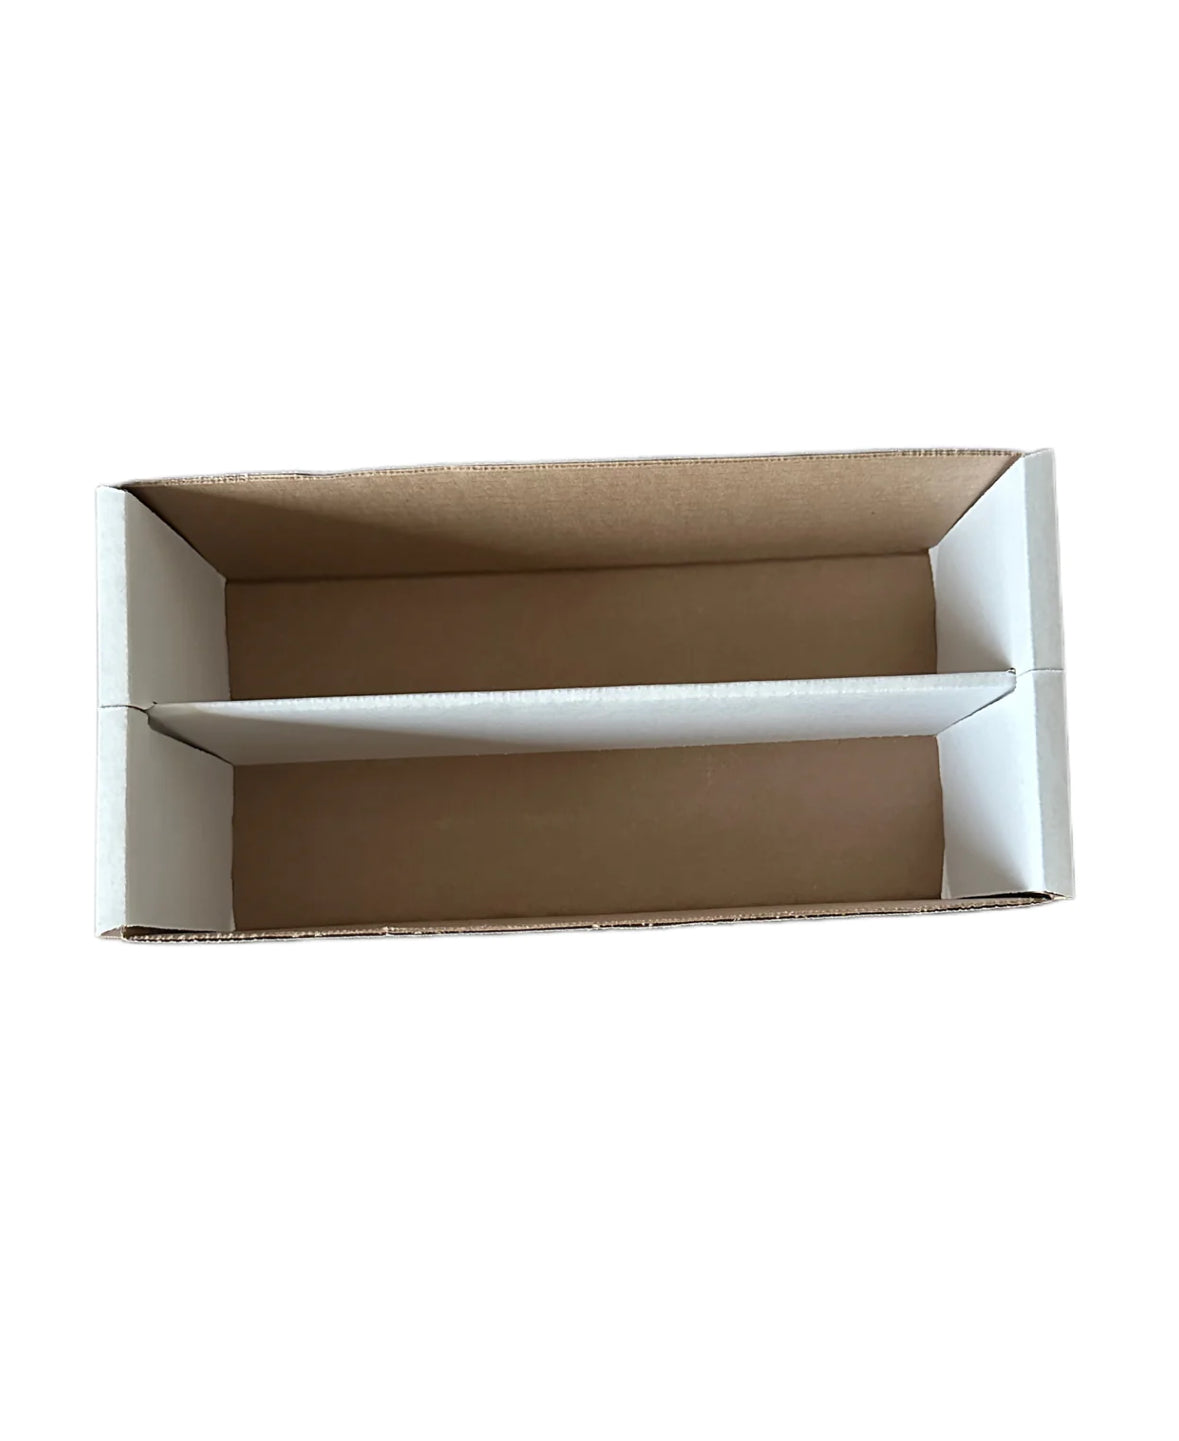 CSP Trading Card Storage Box Cardboard - Shoe Box 1600ct